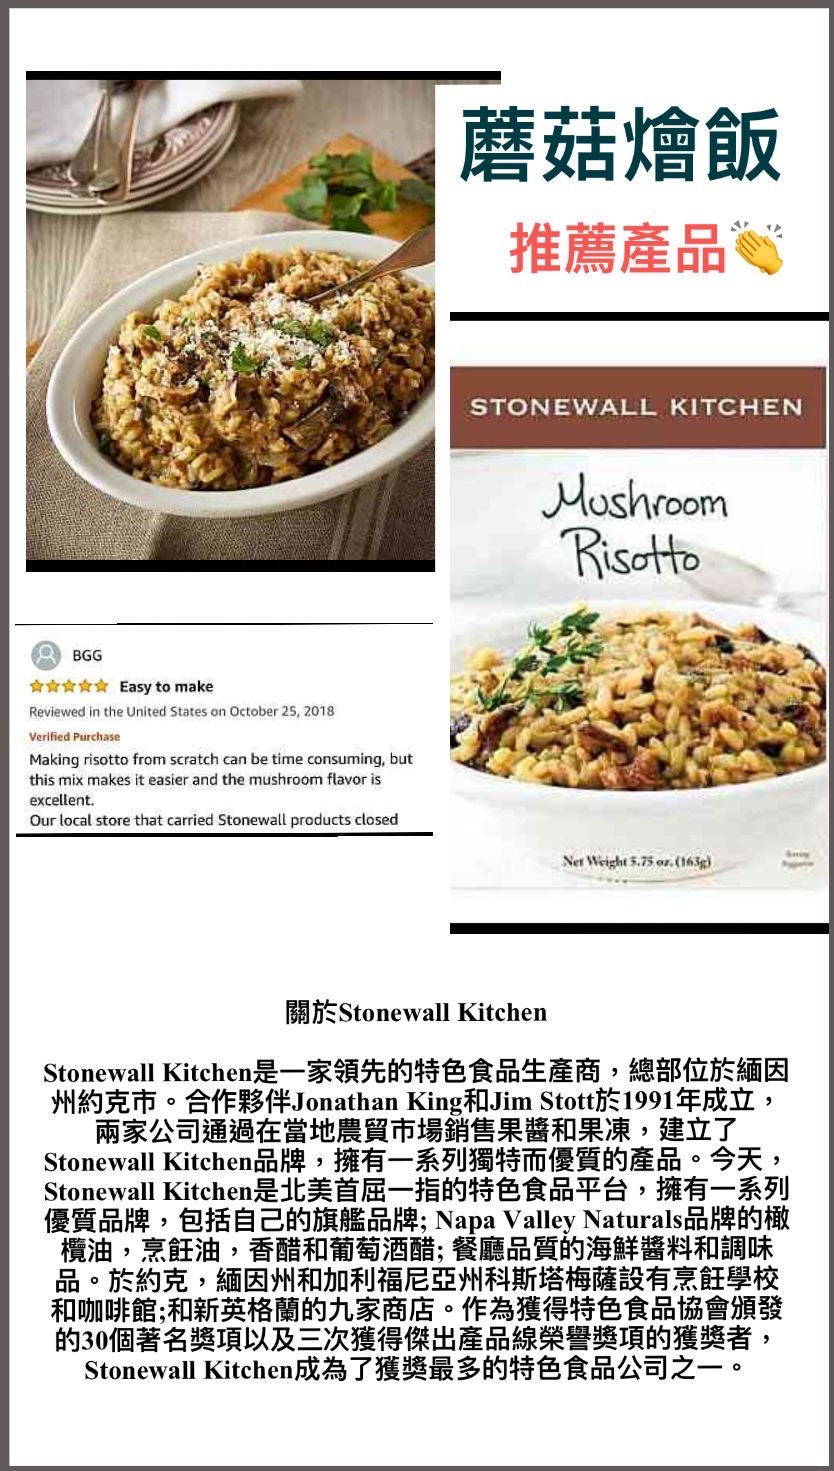 ✅ Stonewall Kitchen Mushroom Risotto Mix